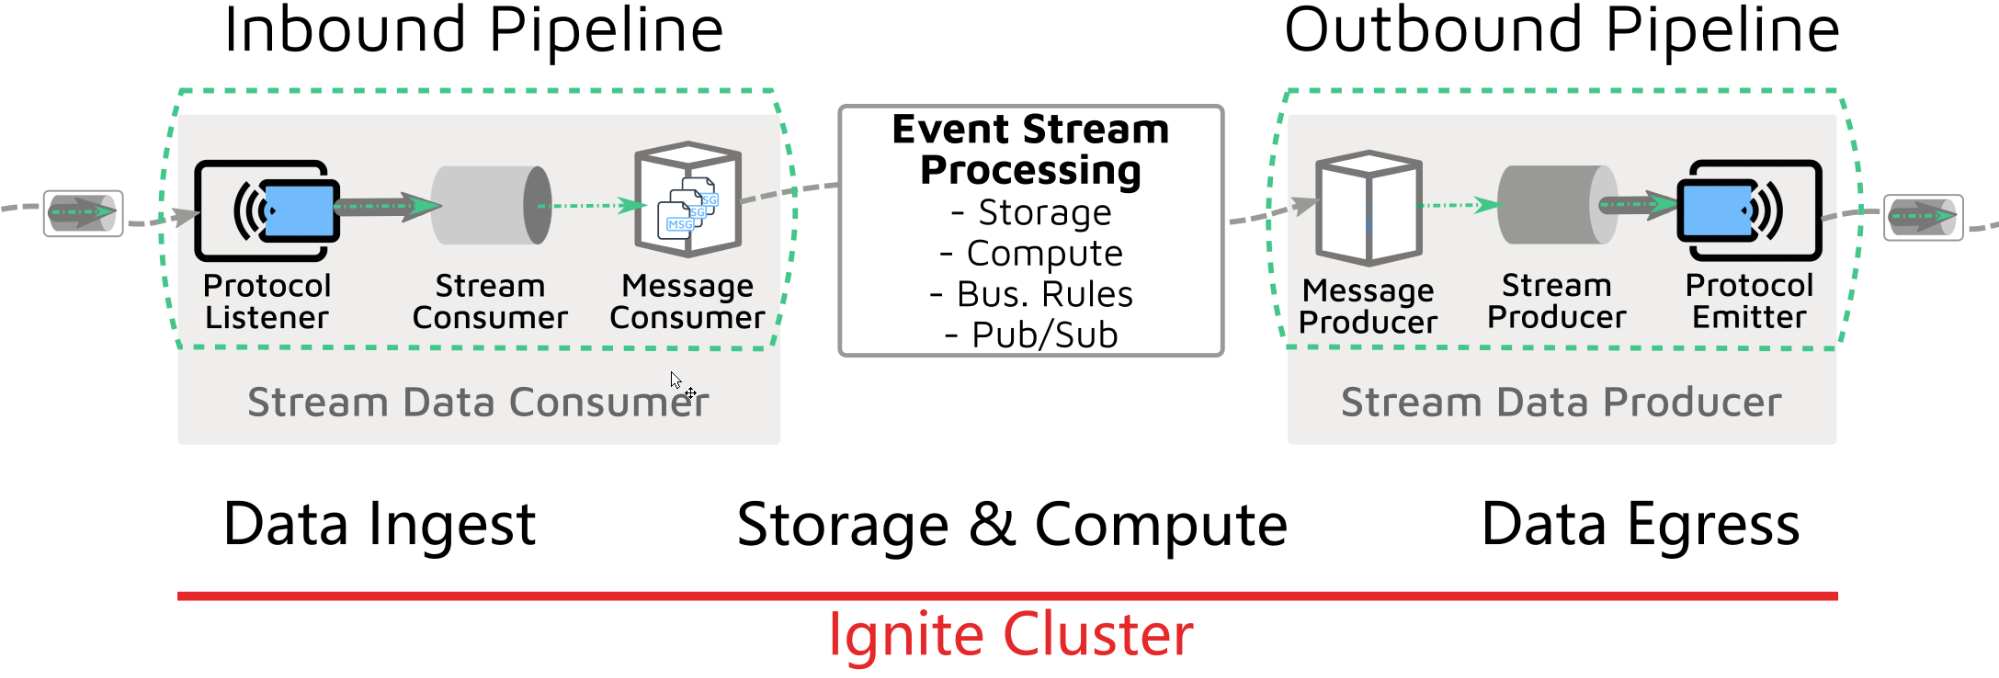 Apache Ignite Event Stream - Image 2